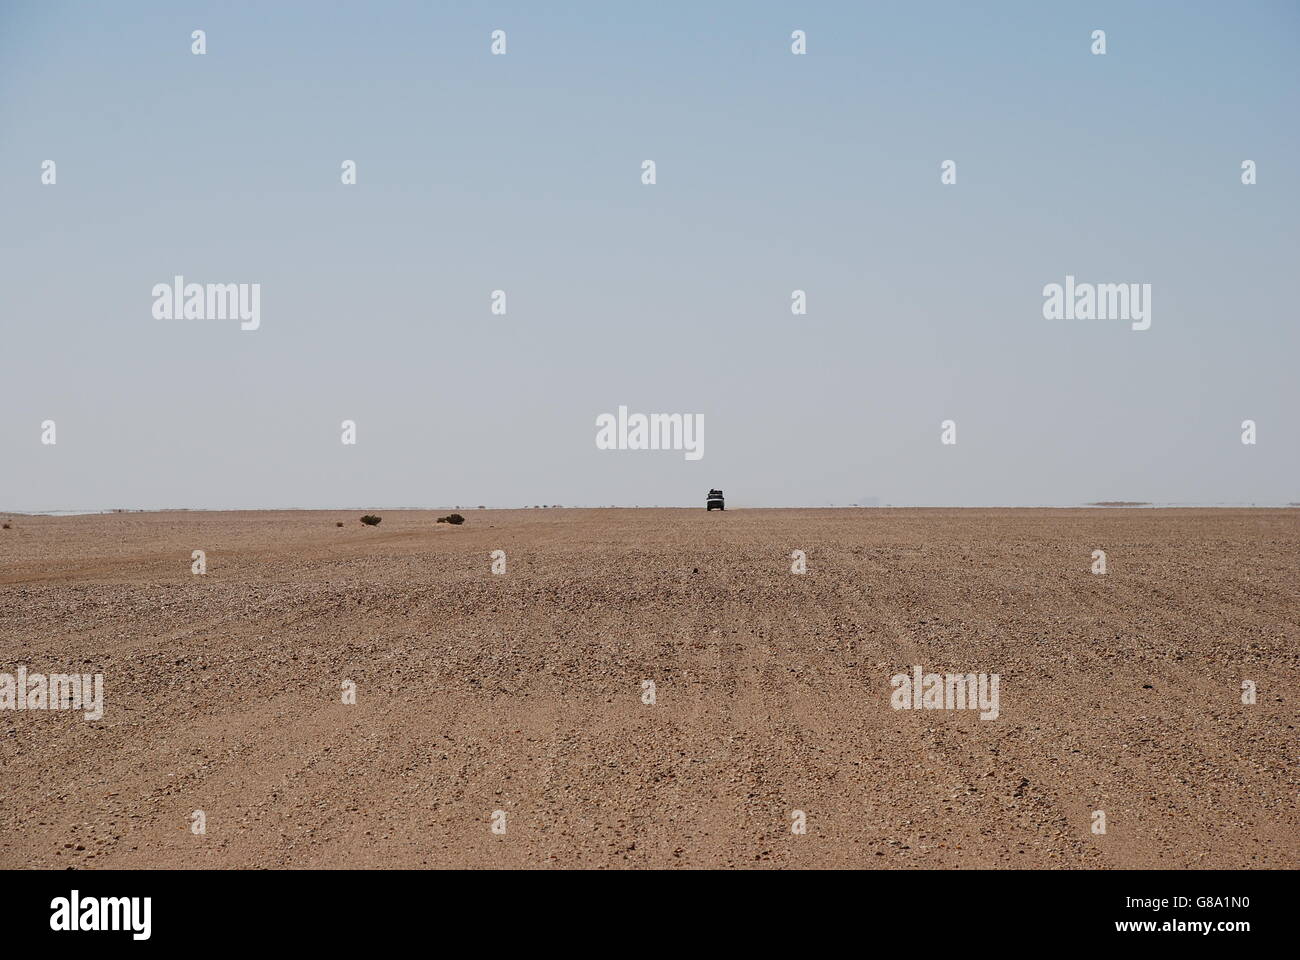 desert, Algeria, empty, rocks, stones, plain, blue sky, copy space, isolated, barren, dry Stock Photo